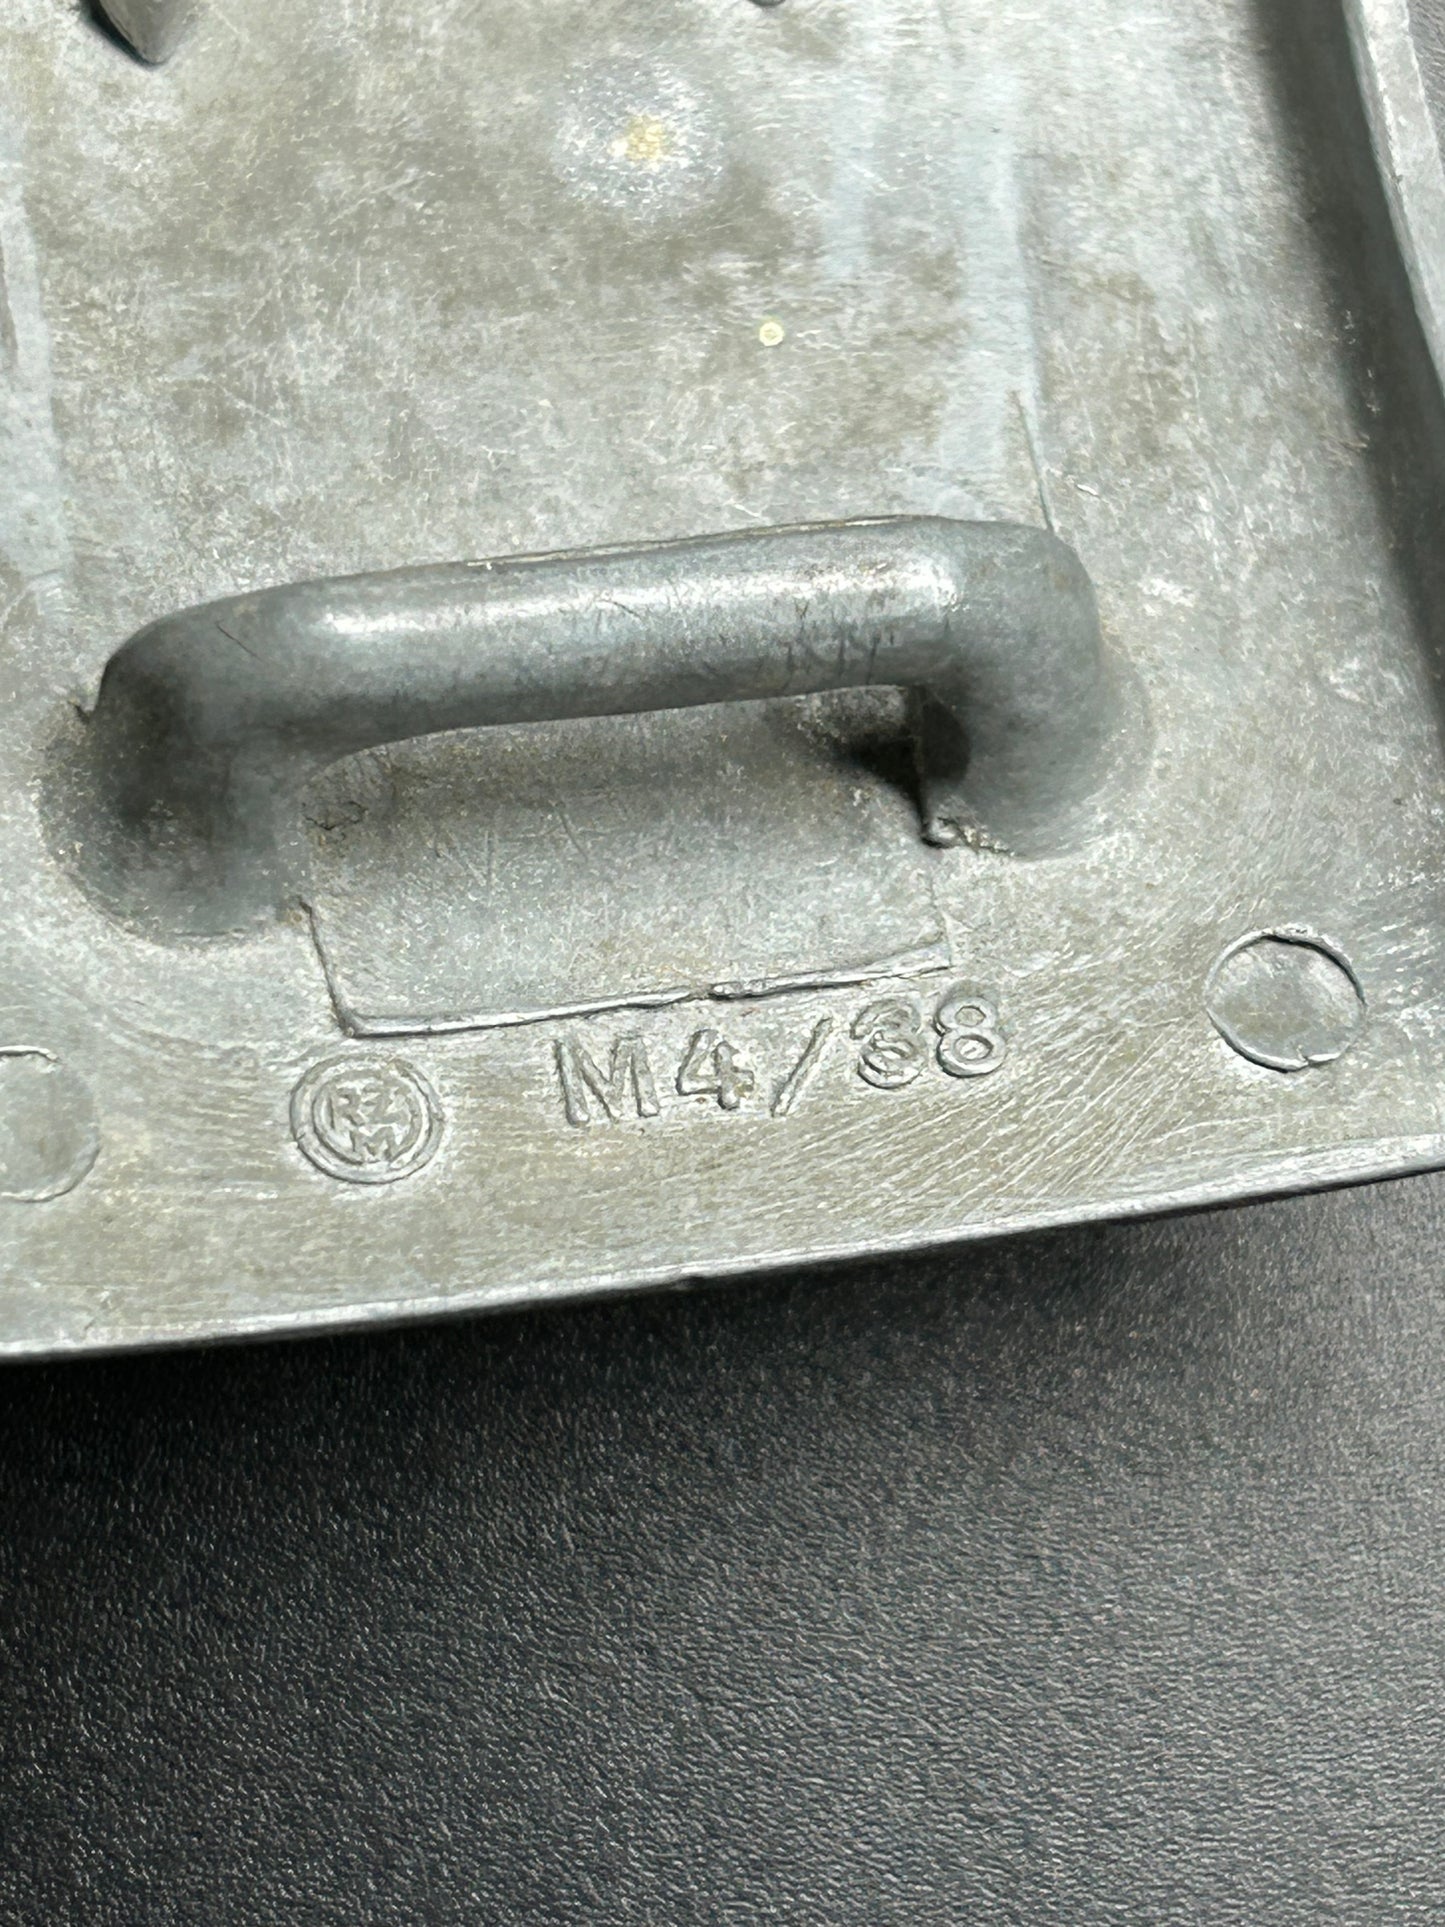 Hitler youth belt buckle (RZM M4/38) zinc coated steel